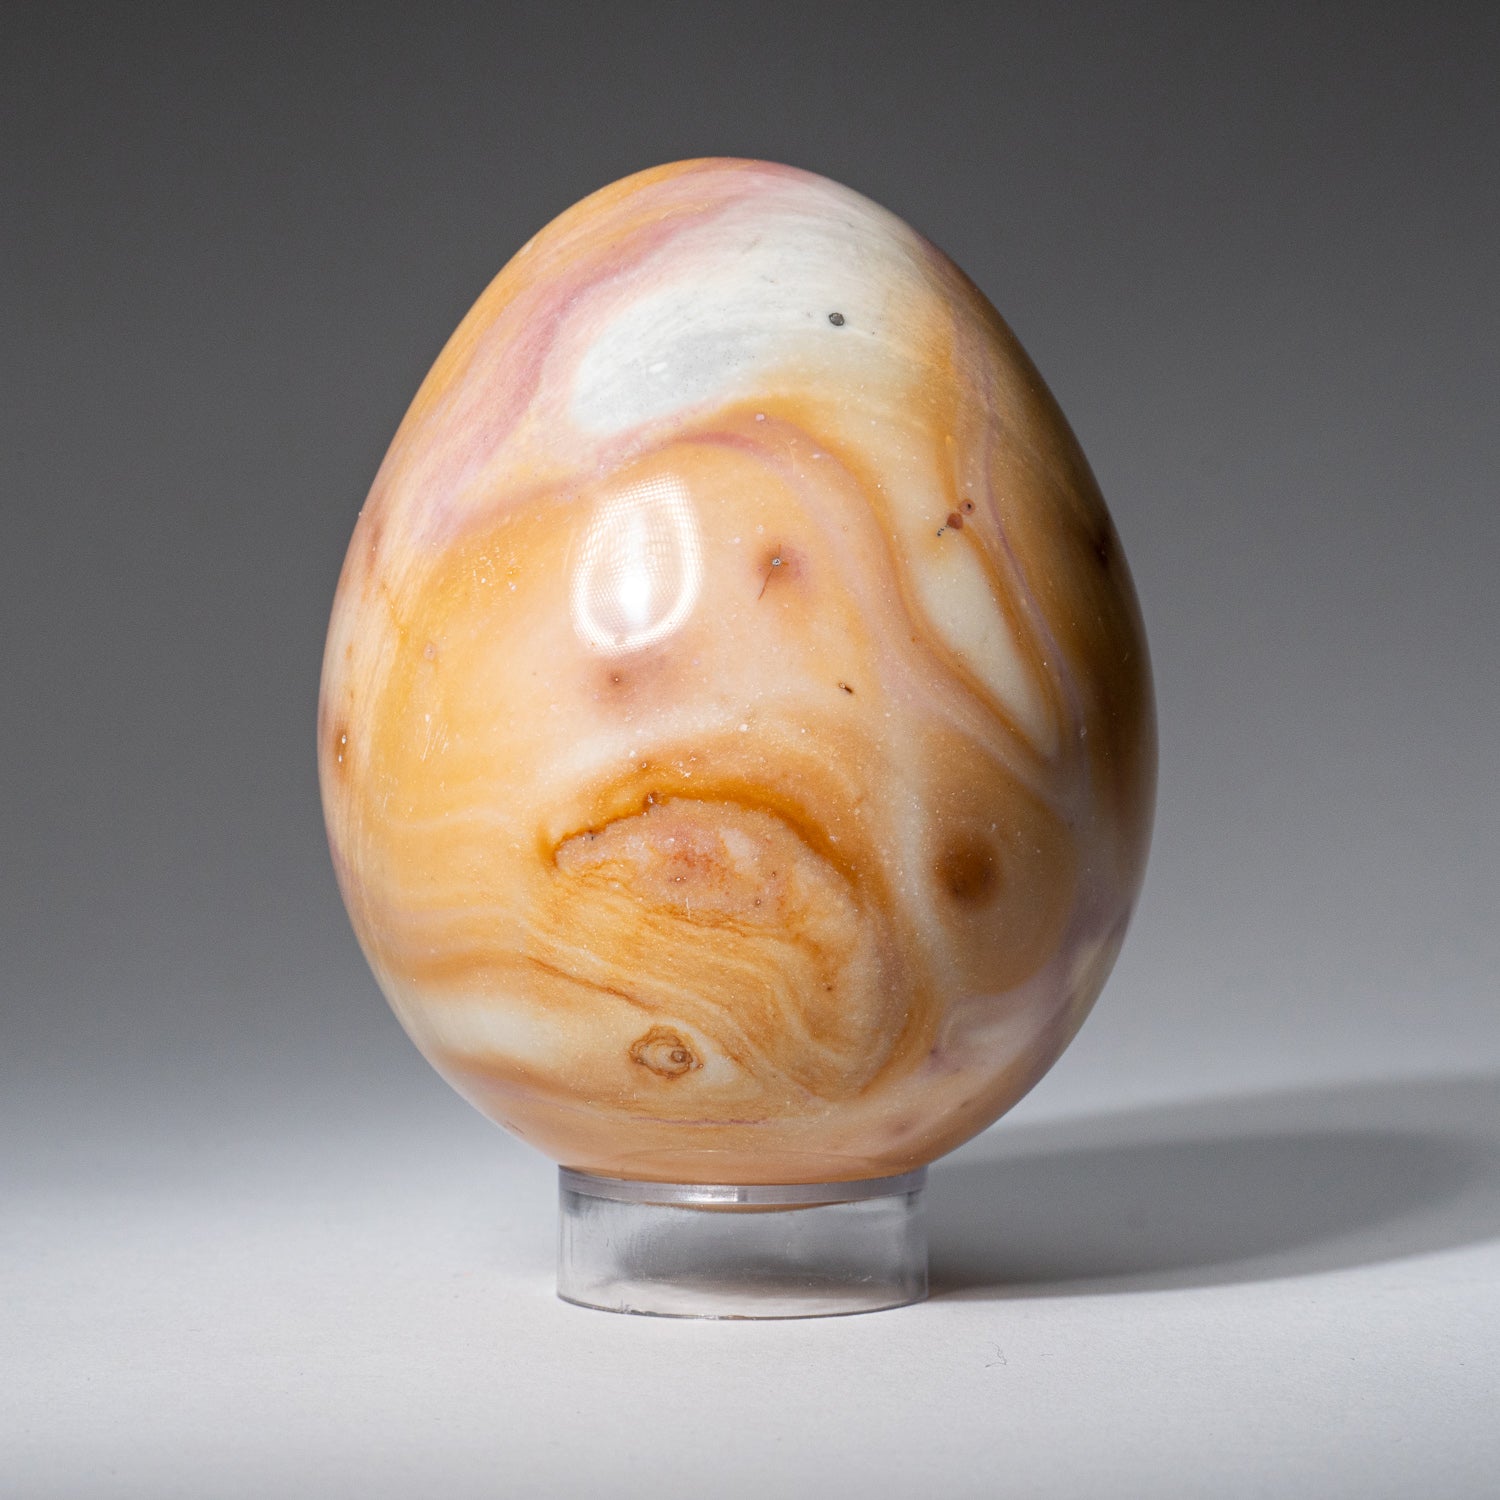 Genuine Polished Polychrome Egg from Madagascar (1.3 lbs)